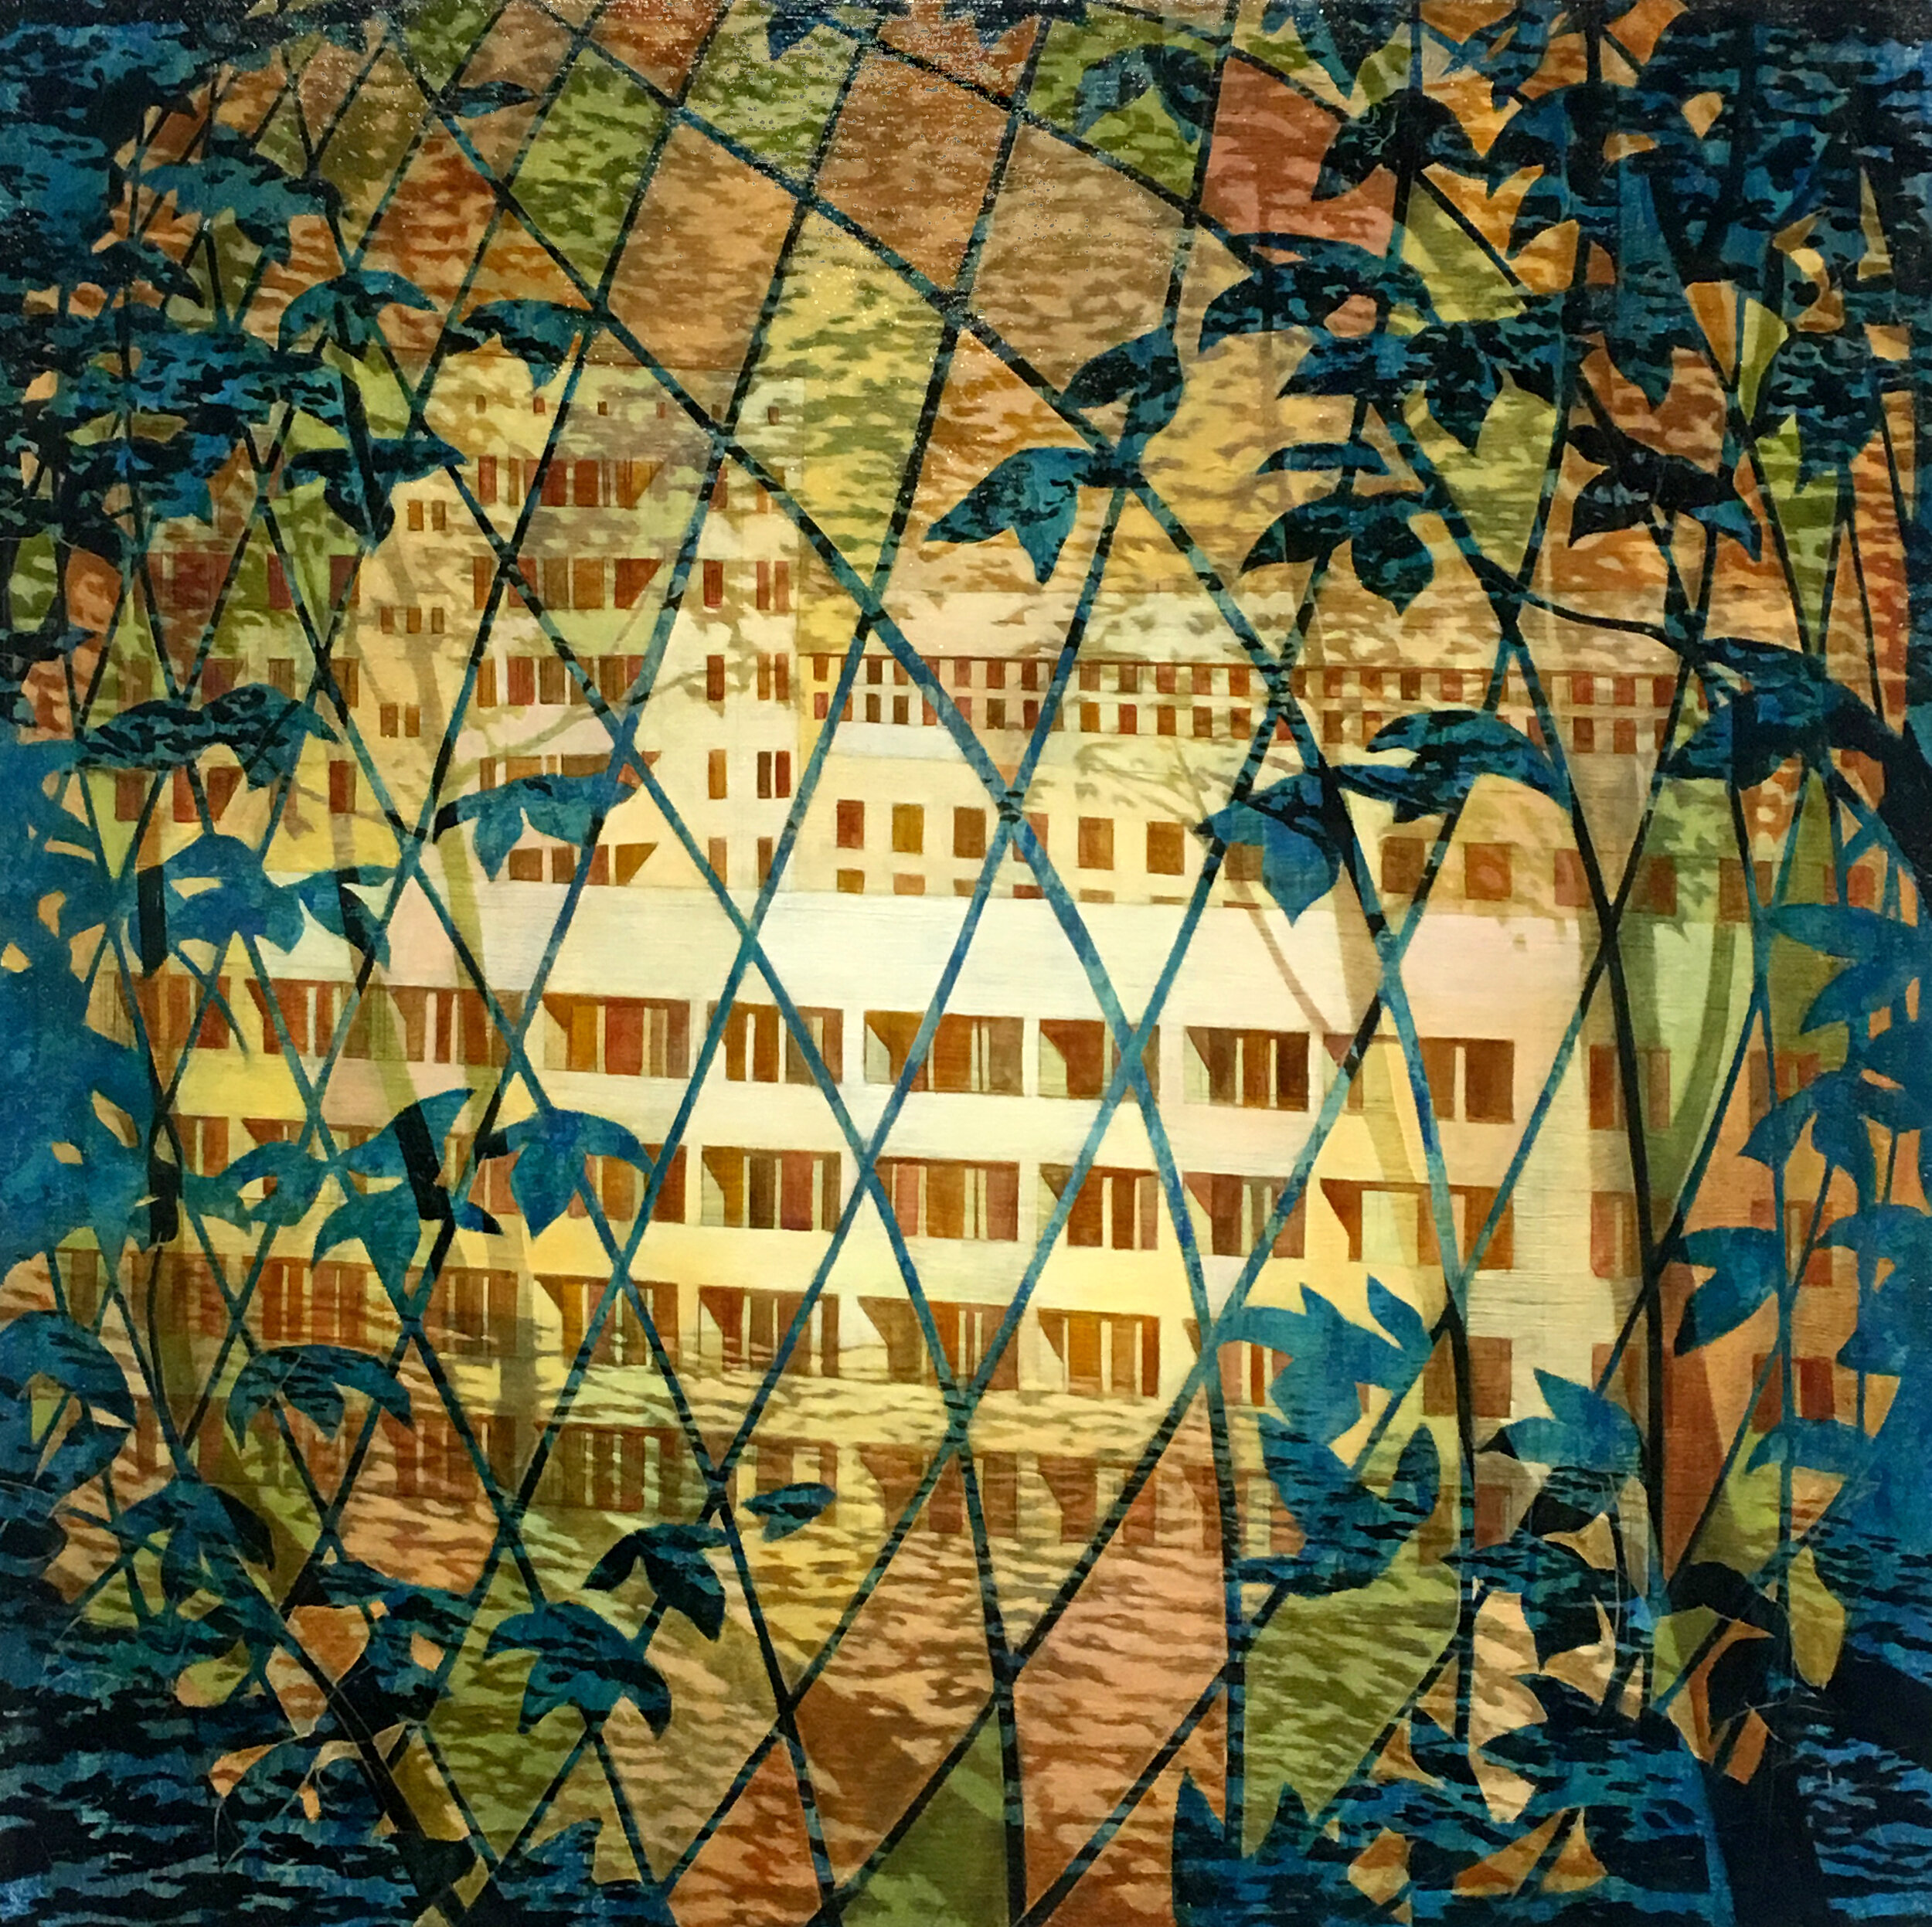   Vincent’s Window   30” x 30”  Oil On Canvas  2019 